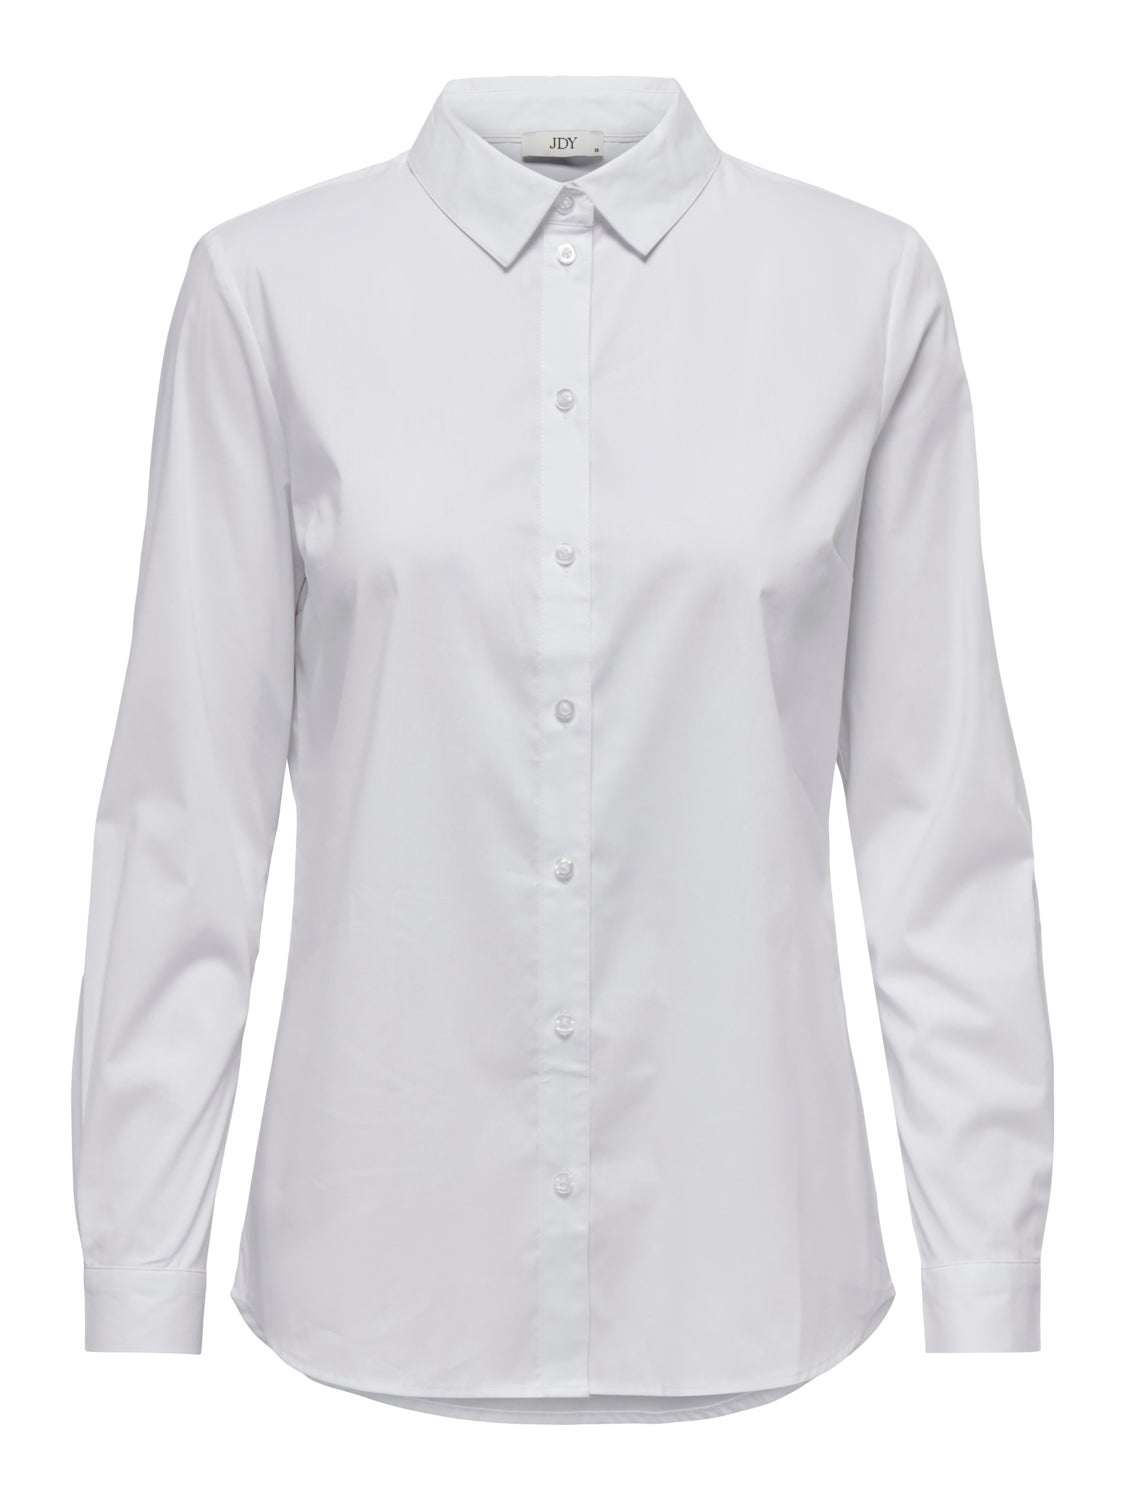 JDYMIO Shirts - White